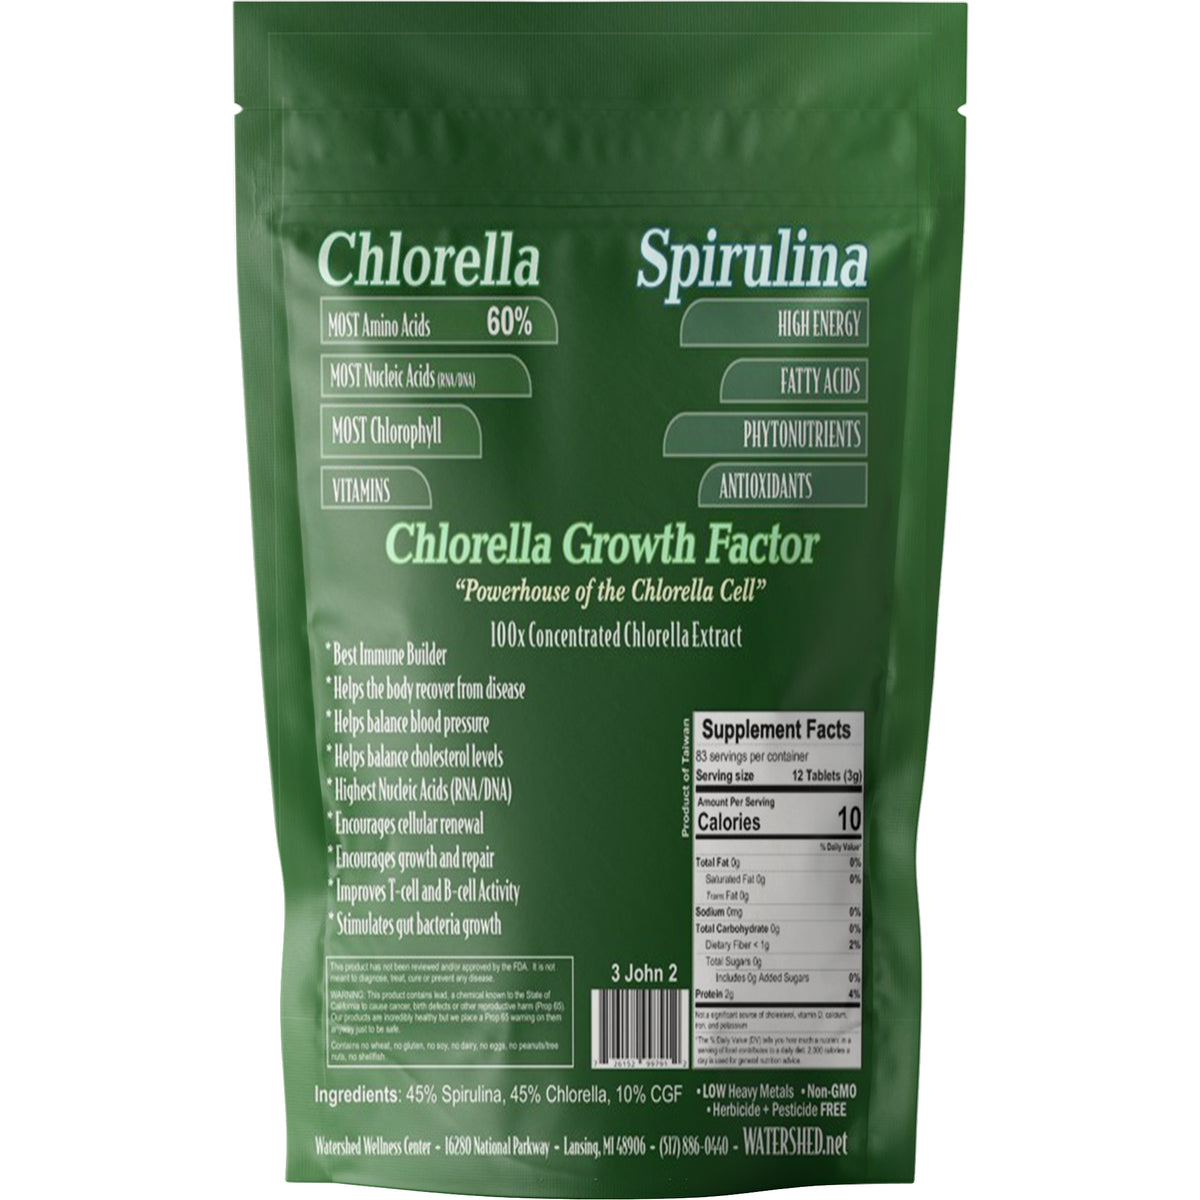 Dr. Bob 45% Chlorella 45% Spirulina 10% CGF Tablets